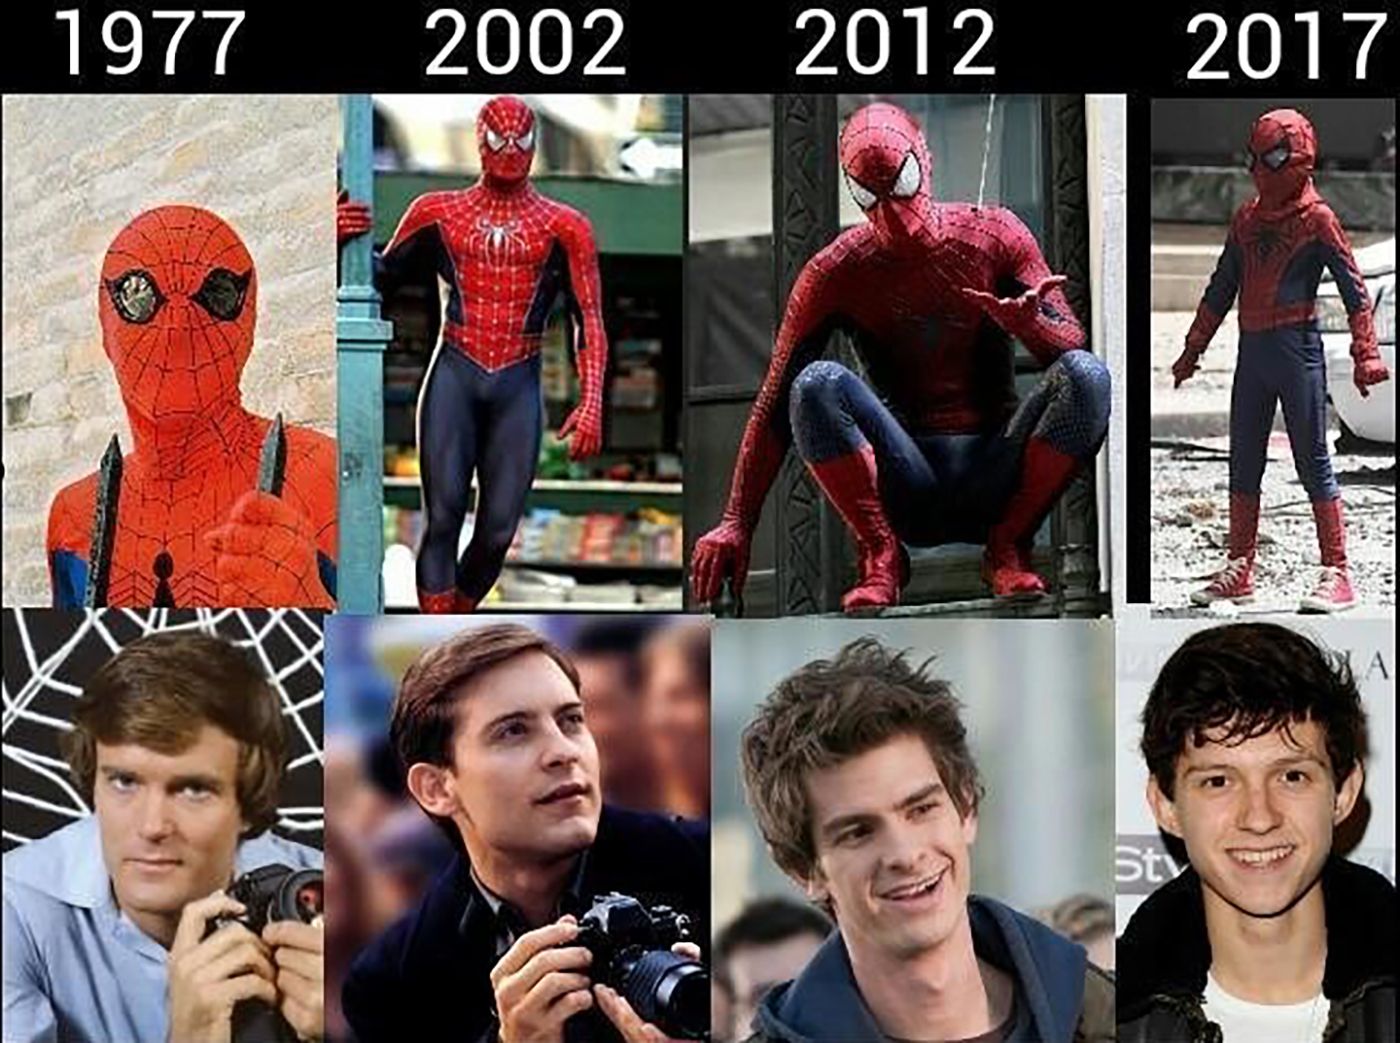 Evolution of Spider-Man